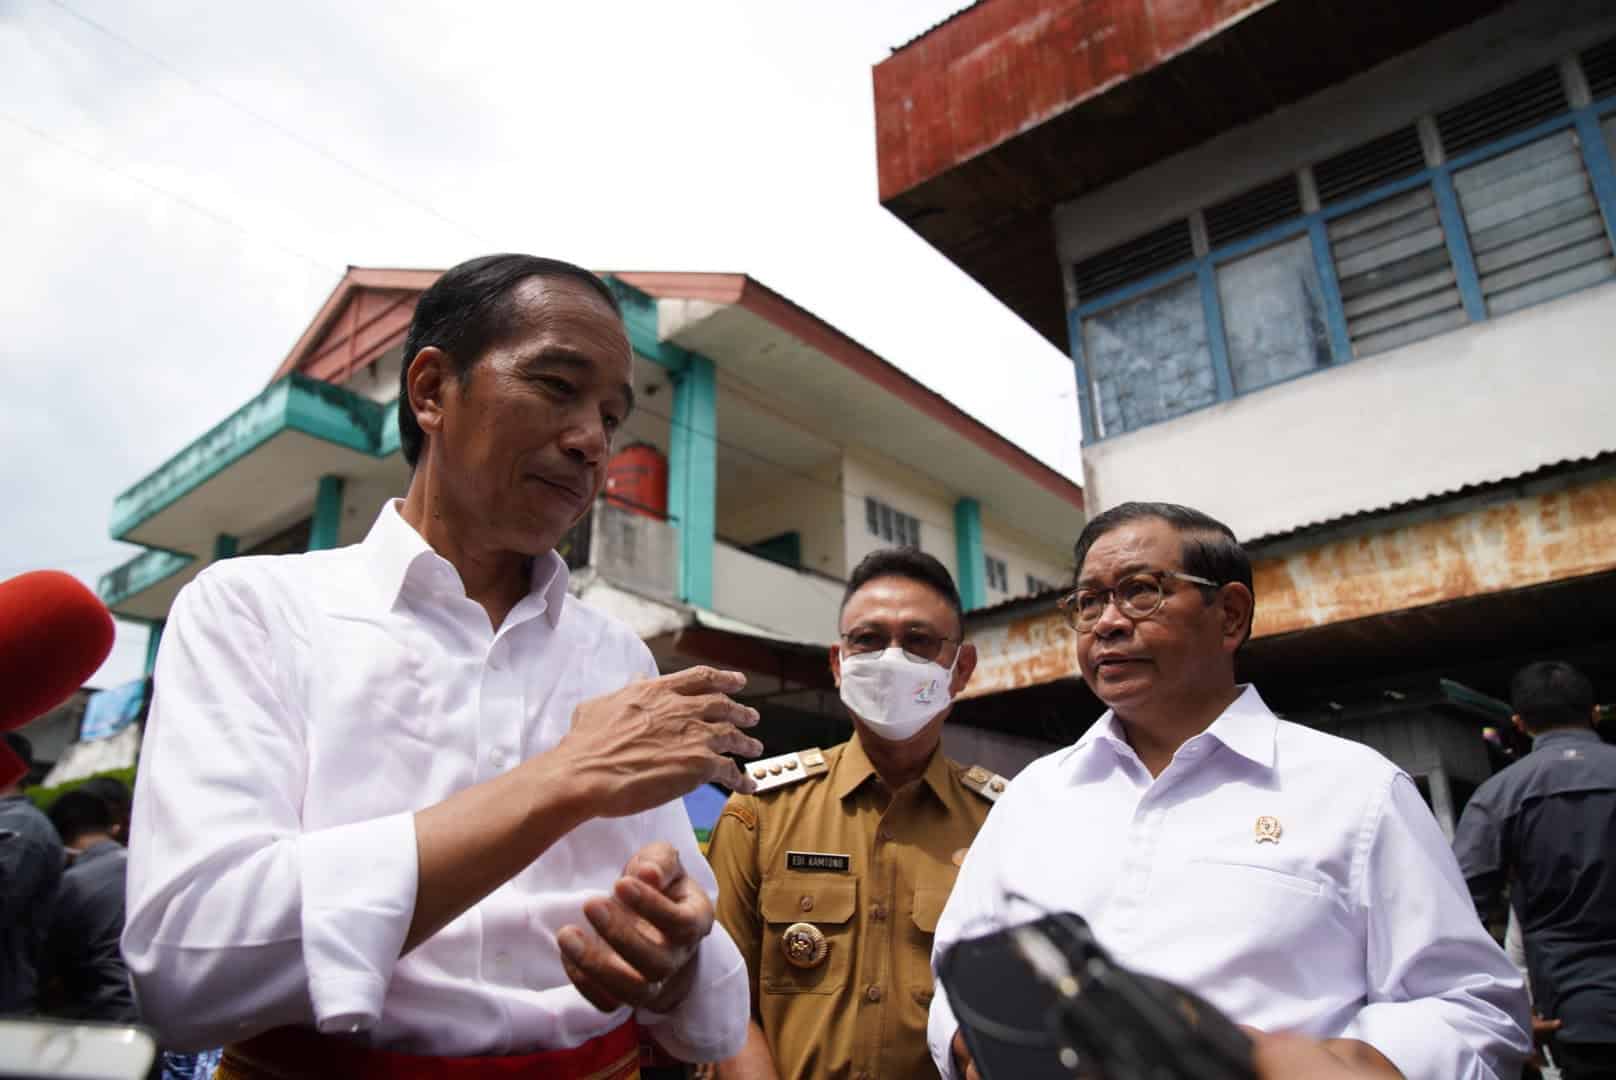 Wali Kota Pontianak, Edi Rusdi Kamtono (tengah) menyambut kedatangan Presiden RI Jokowi di Rumah Radakng. (Foto: Prokopim For KalbarOnline.com)